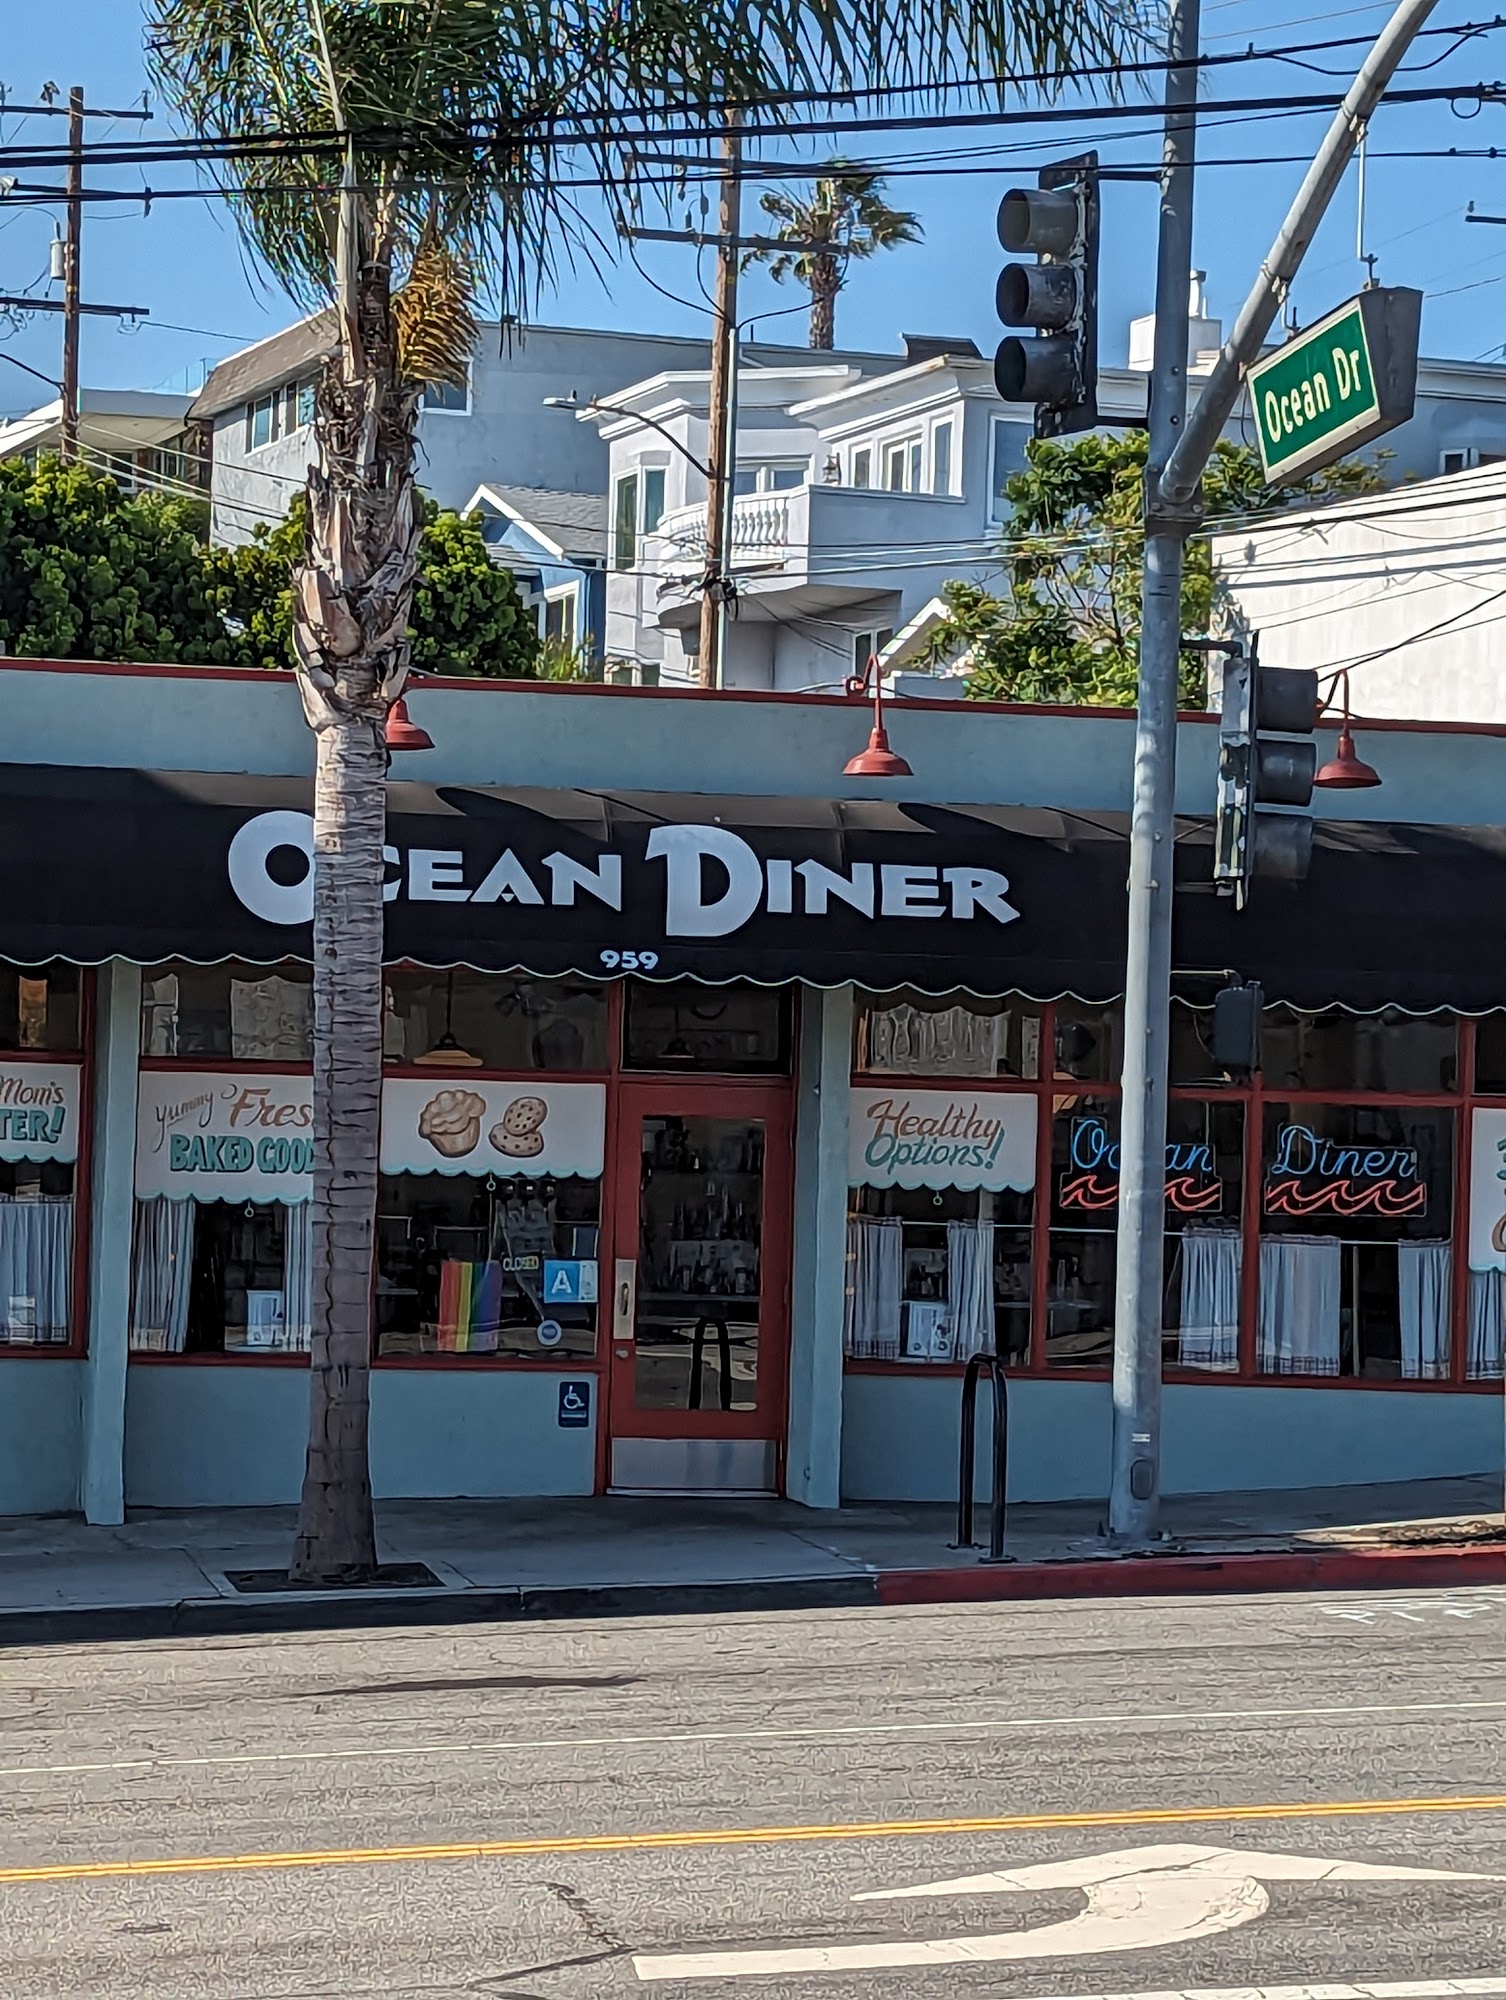 Ocean Diner